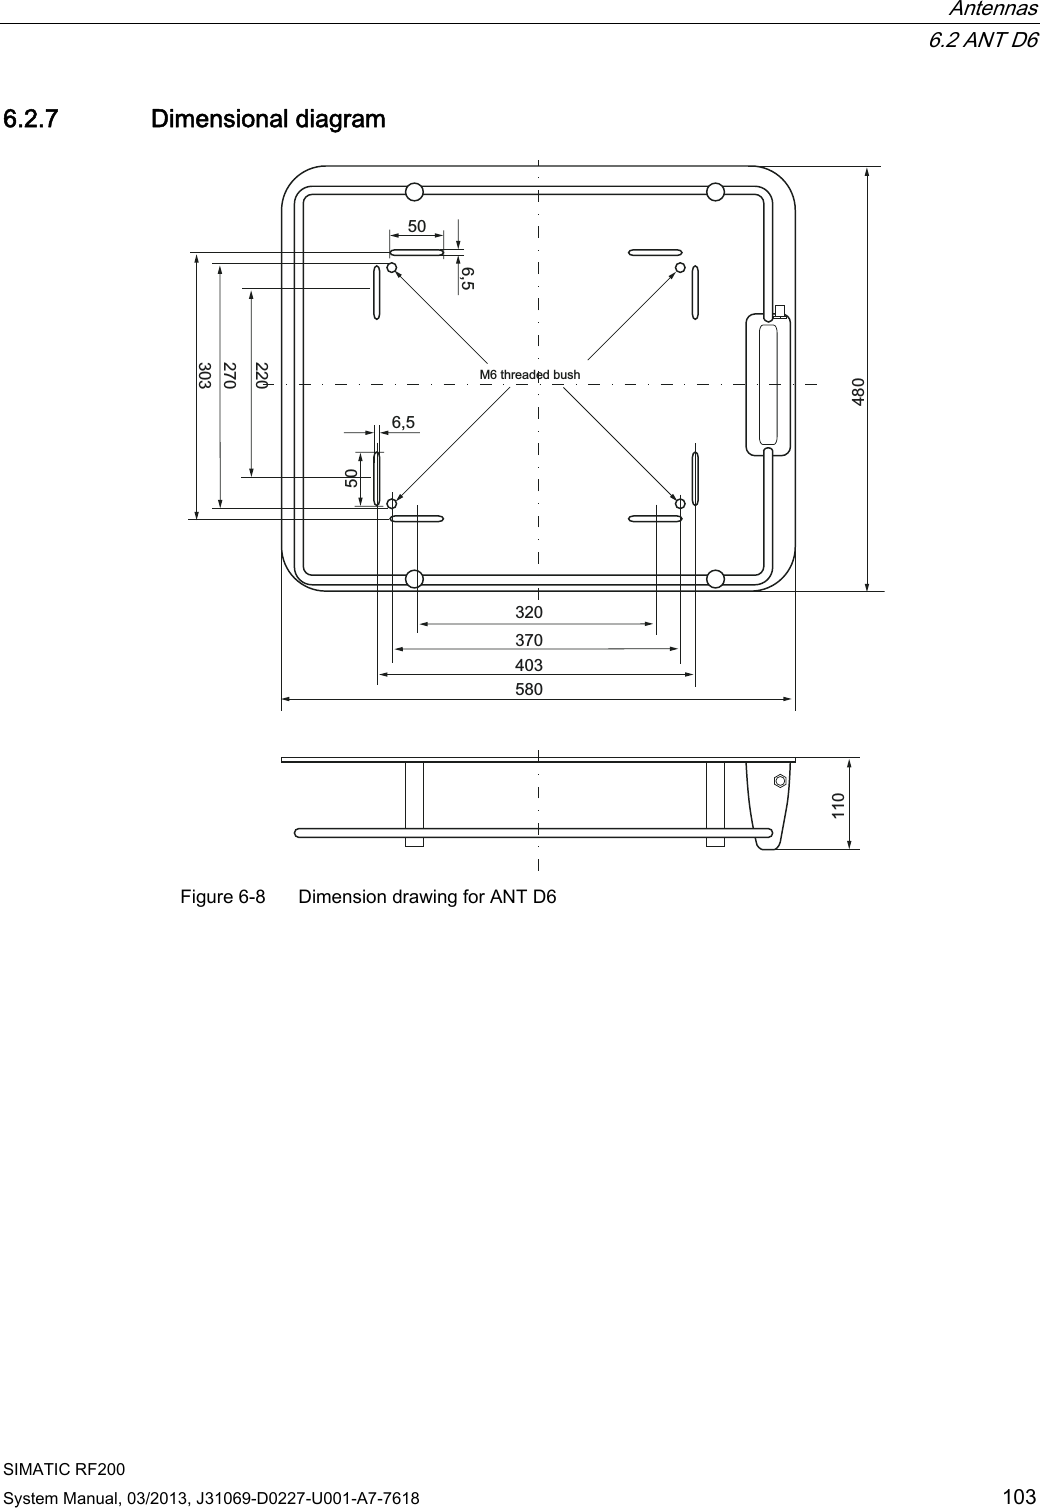  Antennas  6.2 ANT D6 SIMATIC RF200 System Manual, 03/2013, J31069-D0227-U001-A7-7618  103 6.2.7 Dimensional diagram 0WKUHDGHGEXVK Figure 6-8  Dimension drawing for ANT D6 